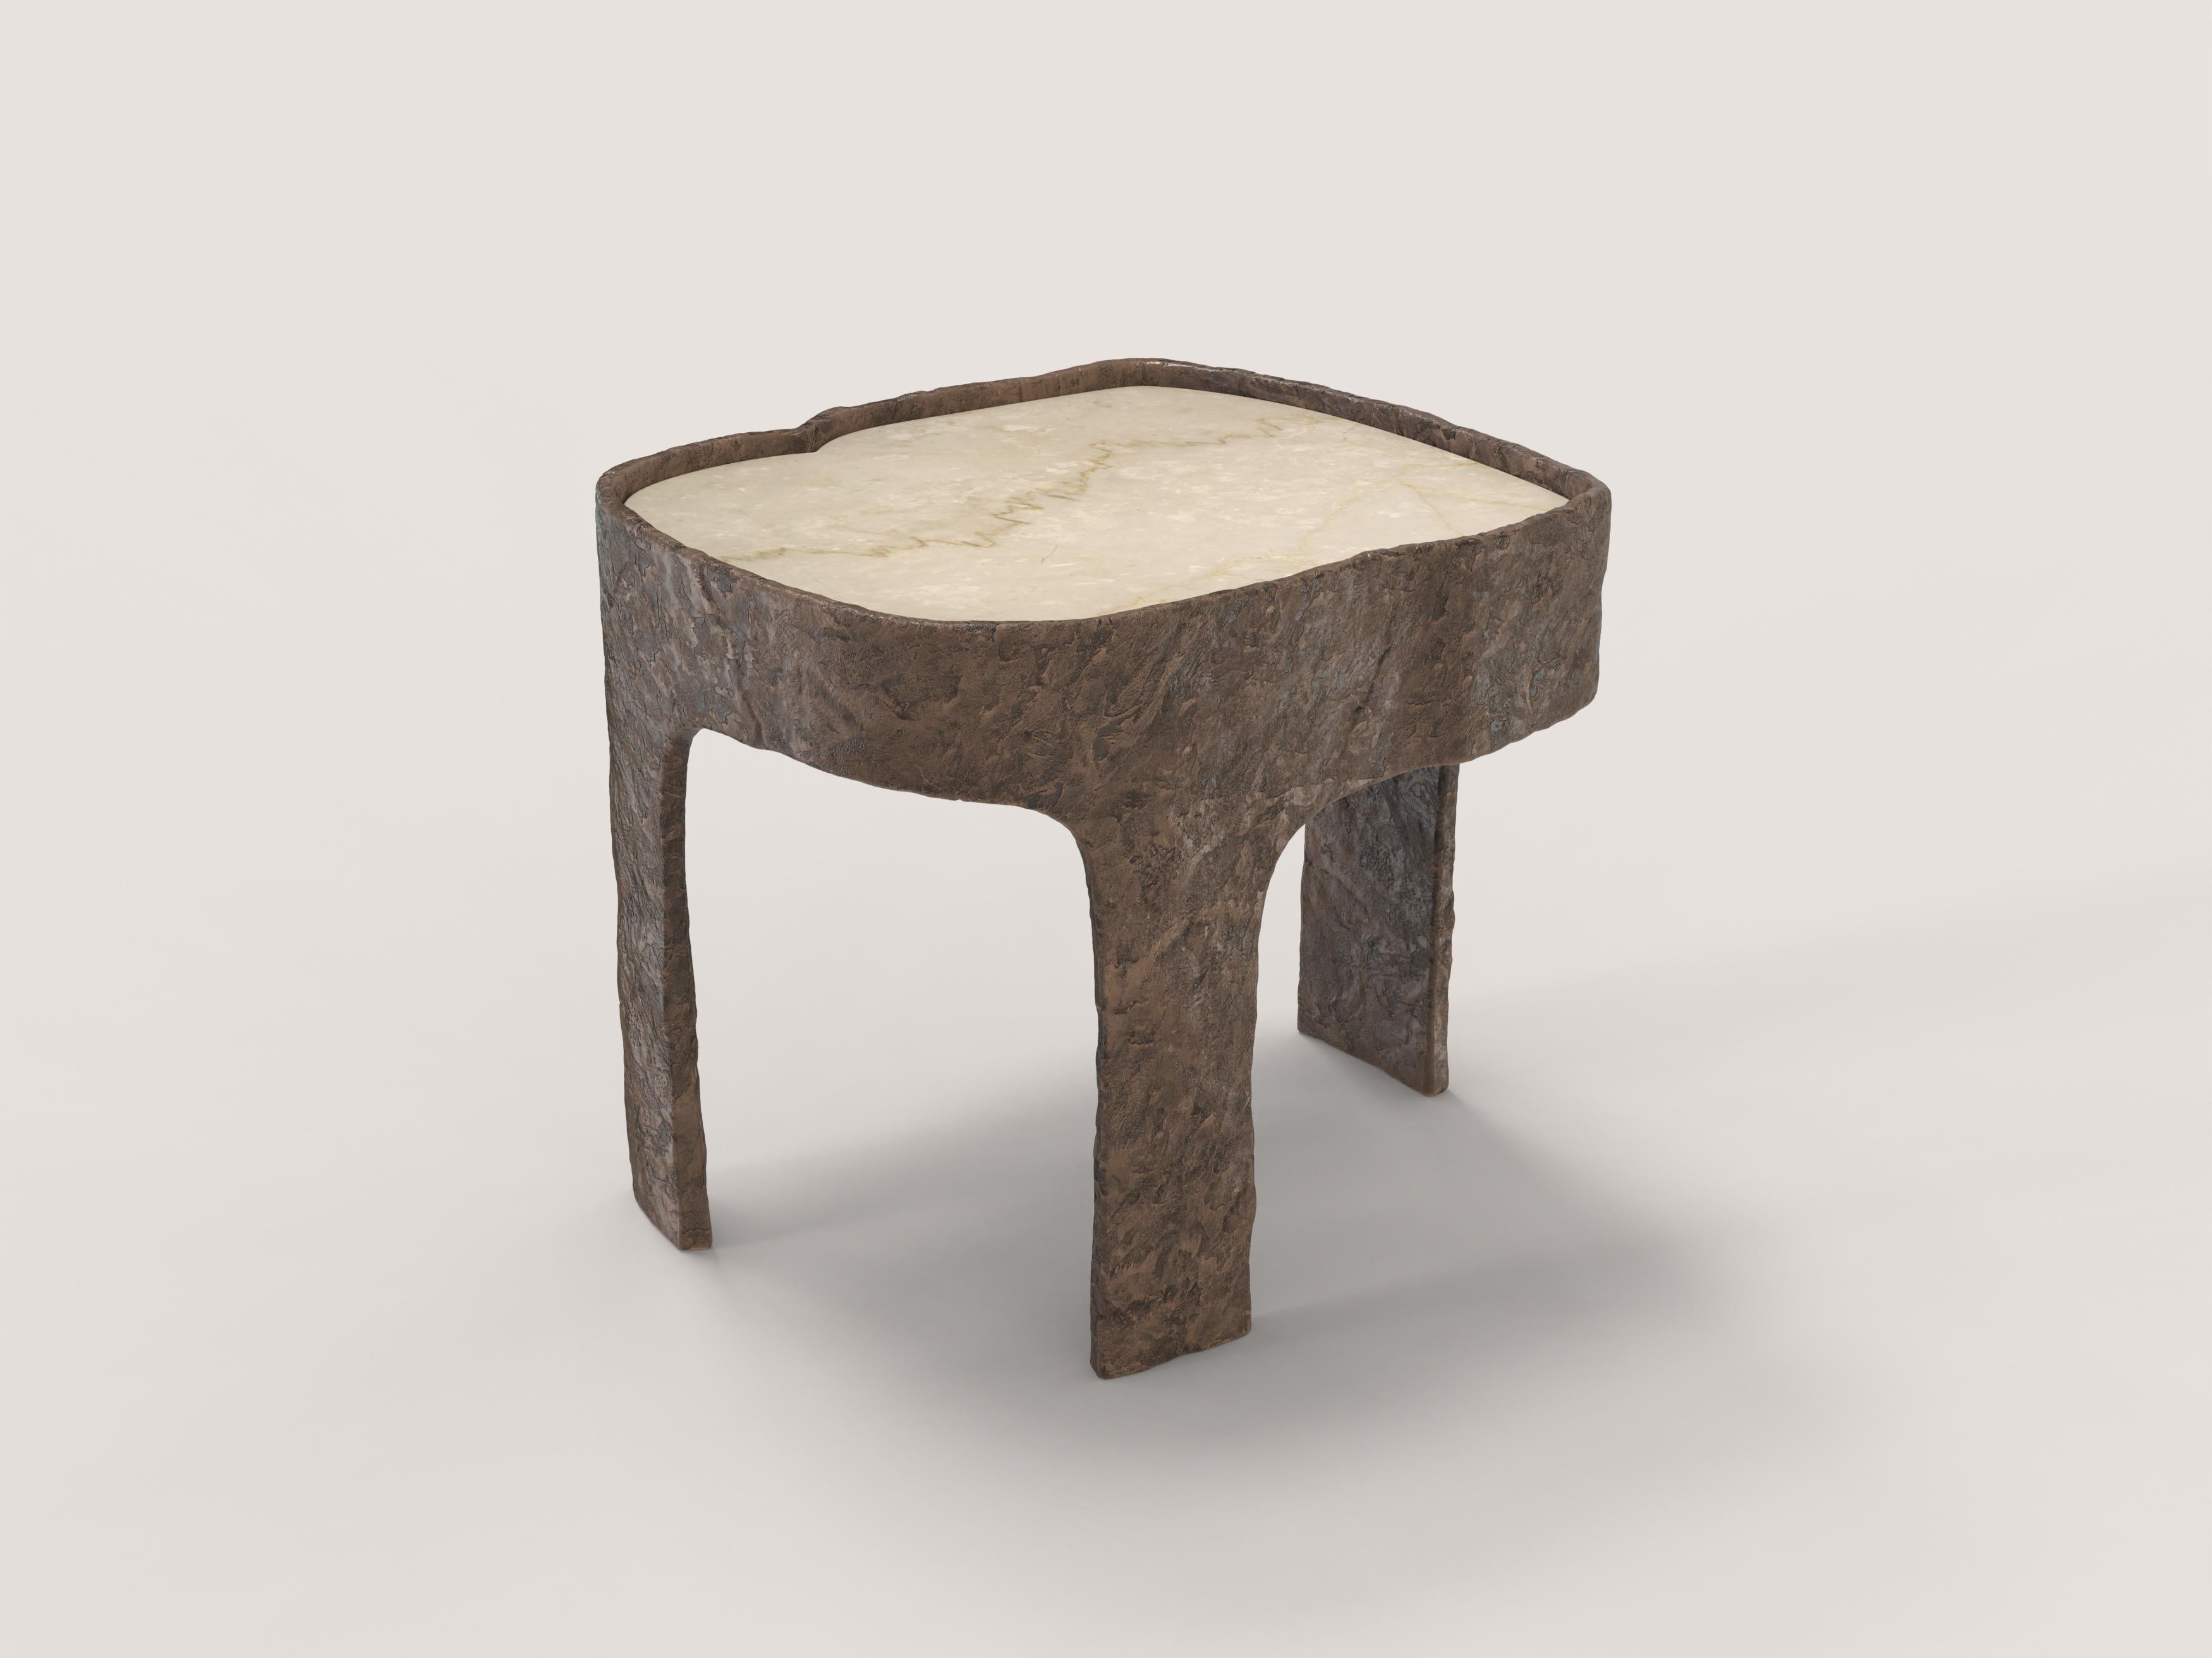 Italian Limited Edition Marble Bronze Table, Sumatra V1 by Edizione Limitata For Sale